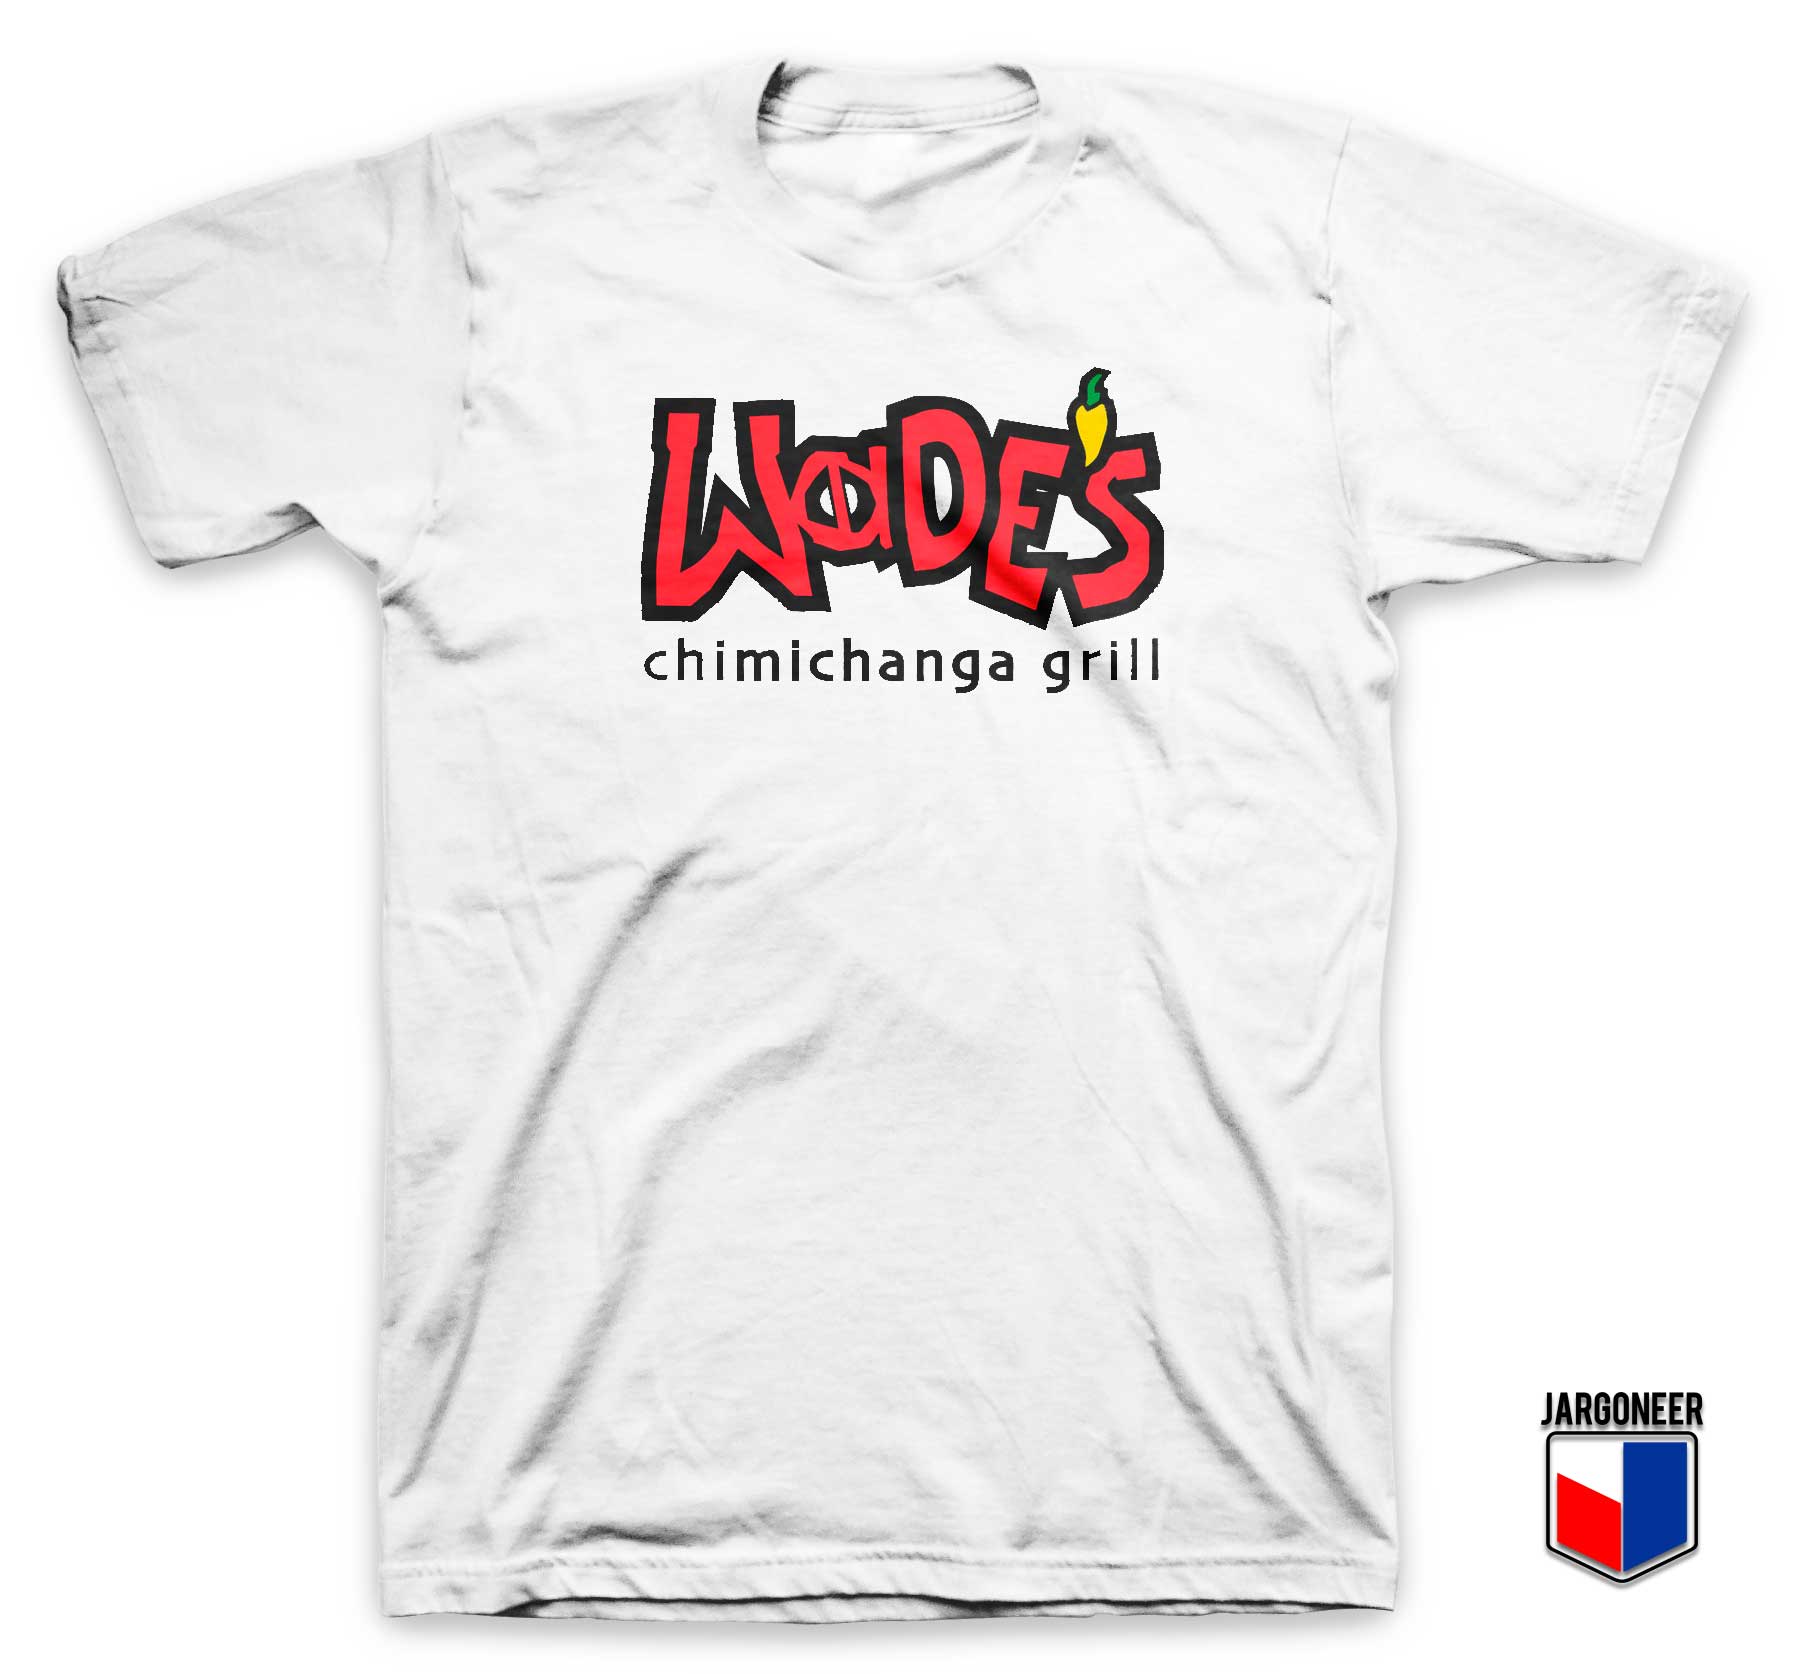 Wades Chimichanga Grill T Shirt - Shop Unique Graphic Cool Shirt Designs